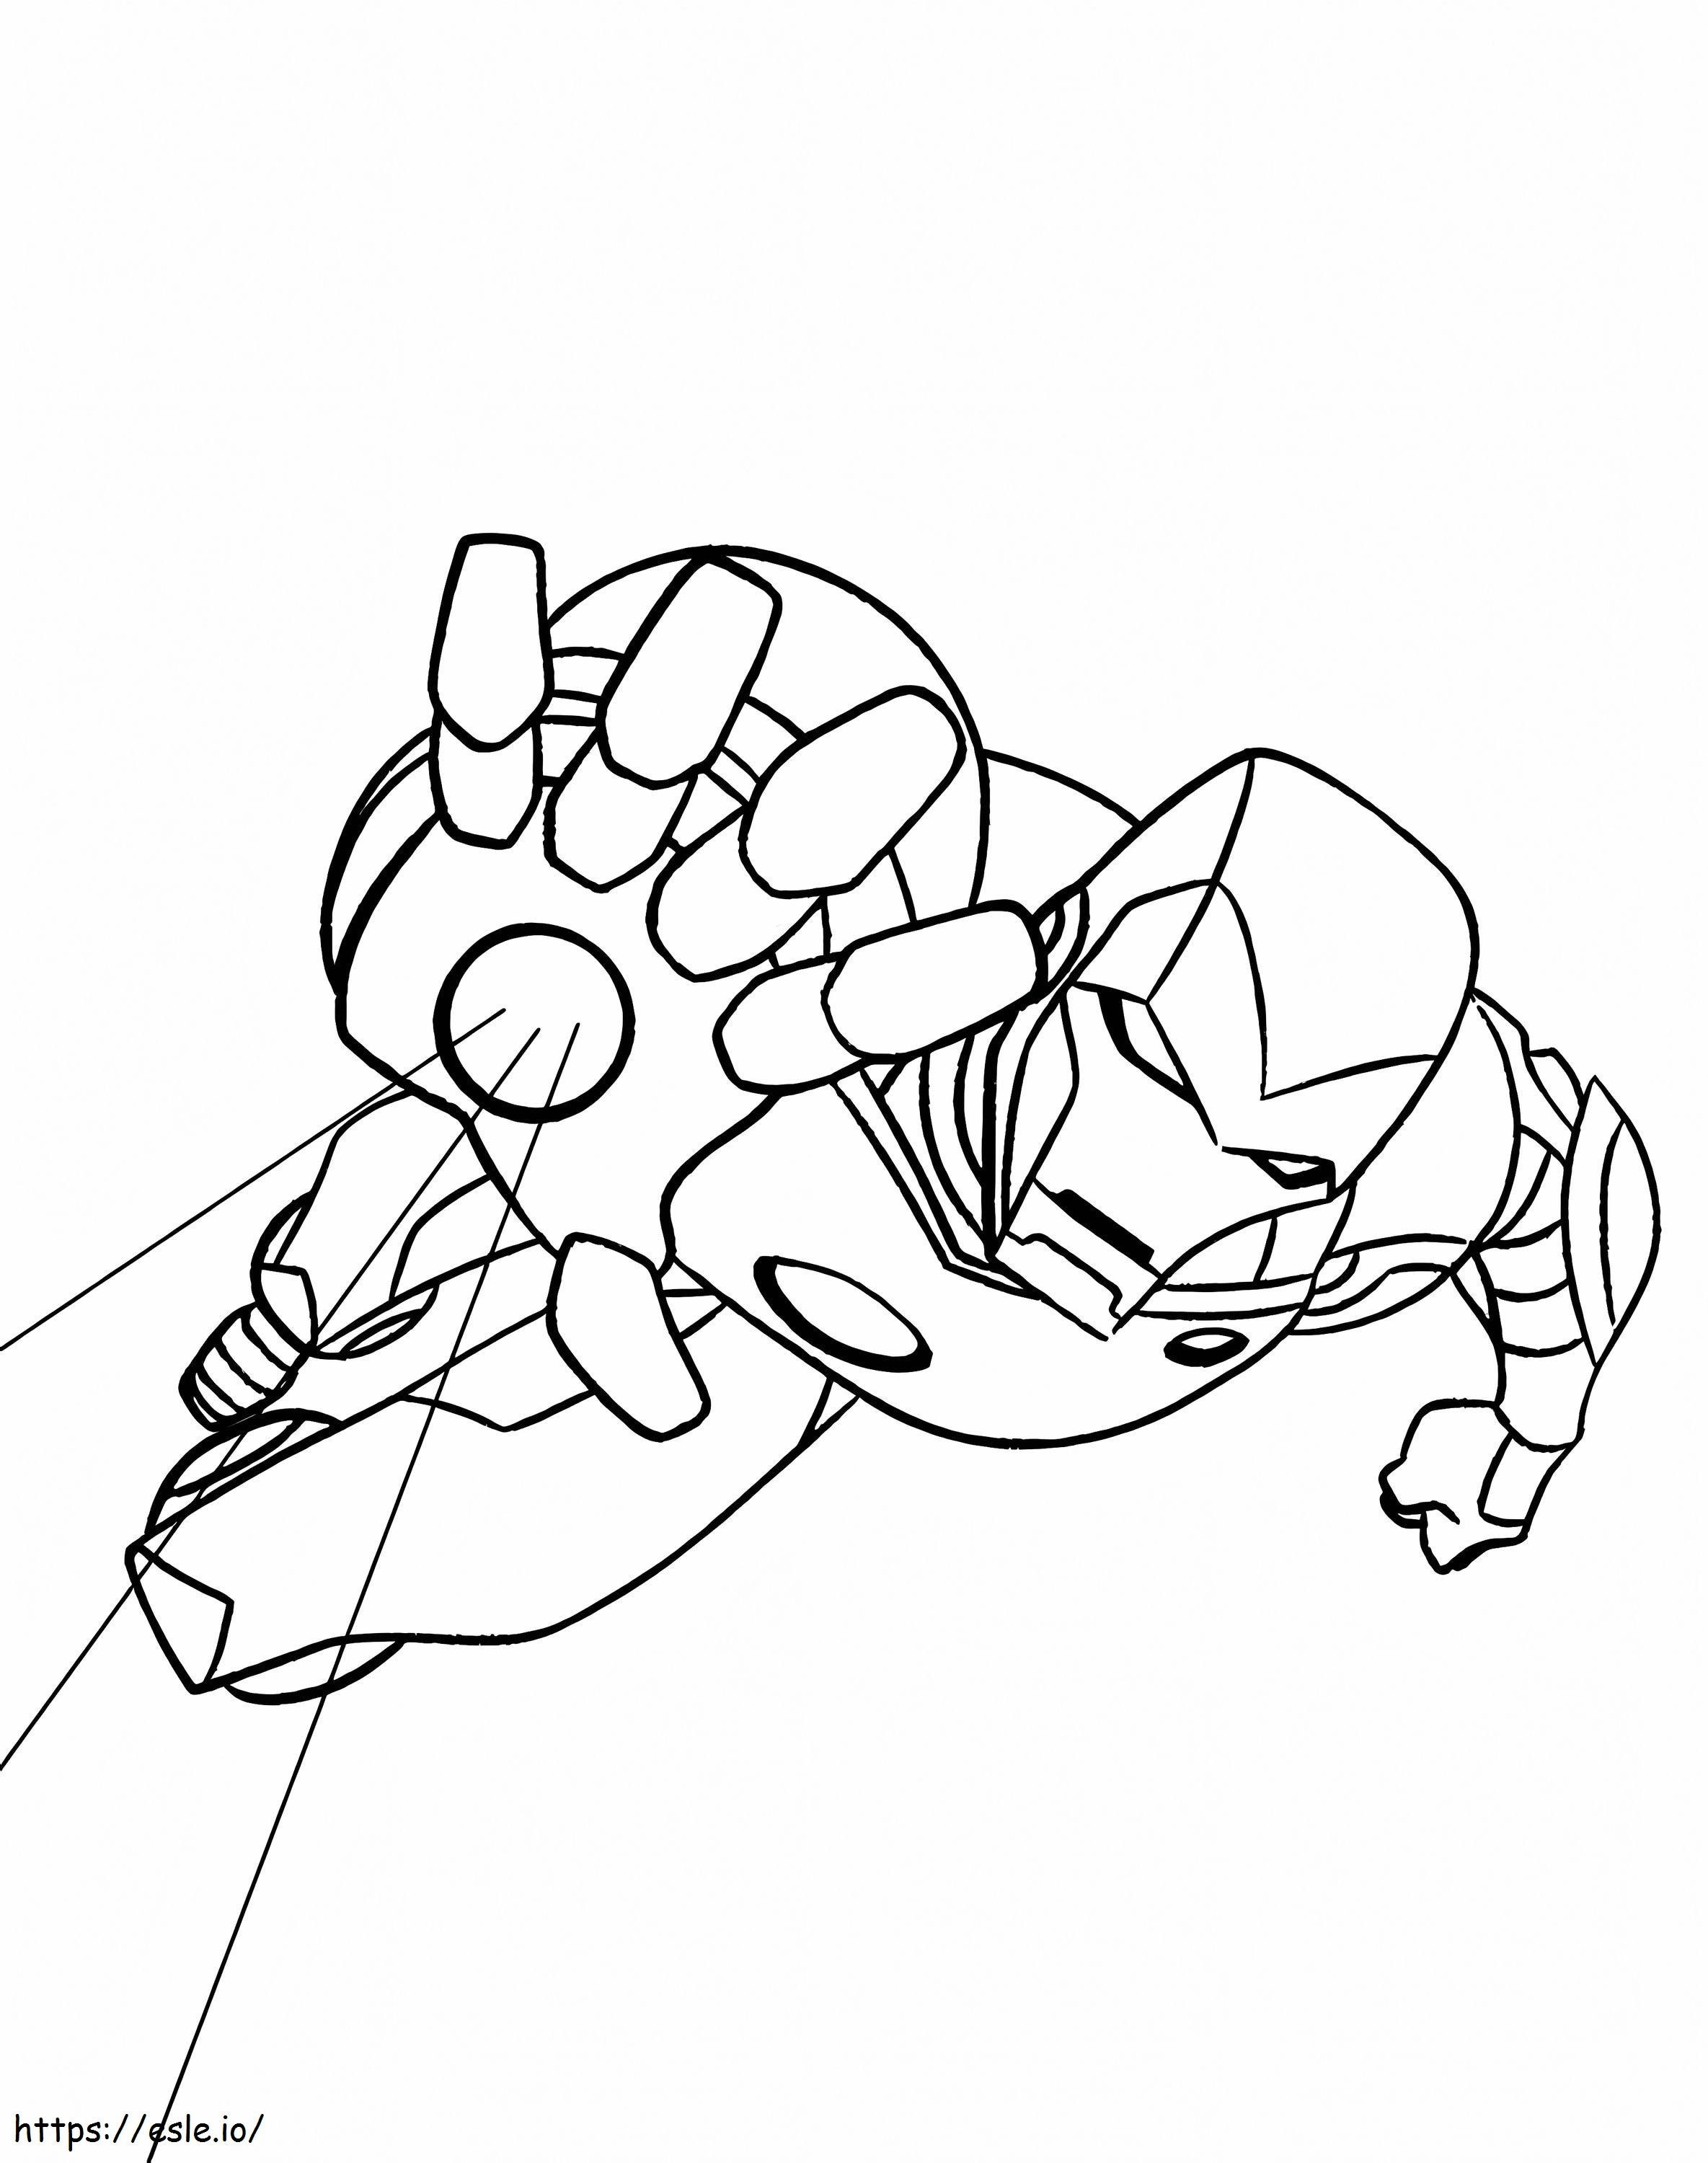 Iron Man Attacks coloring page